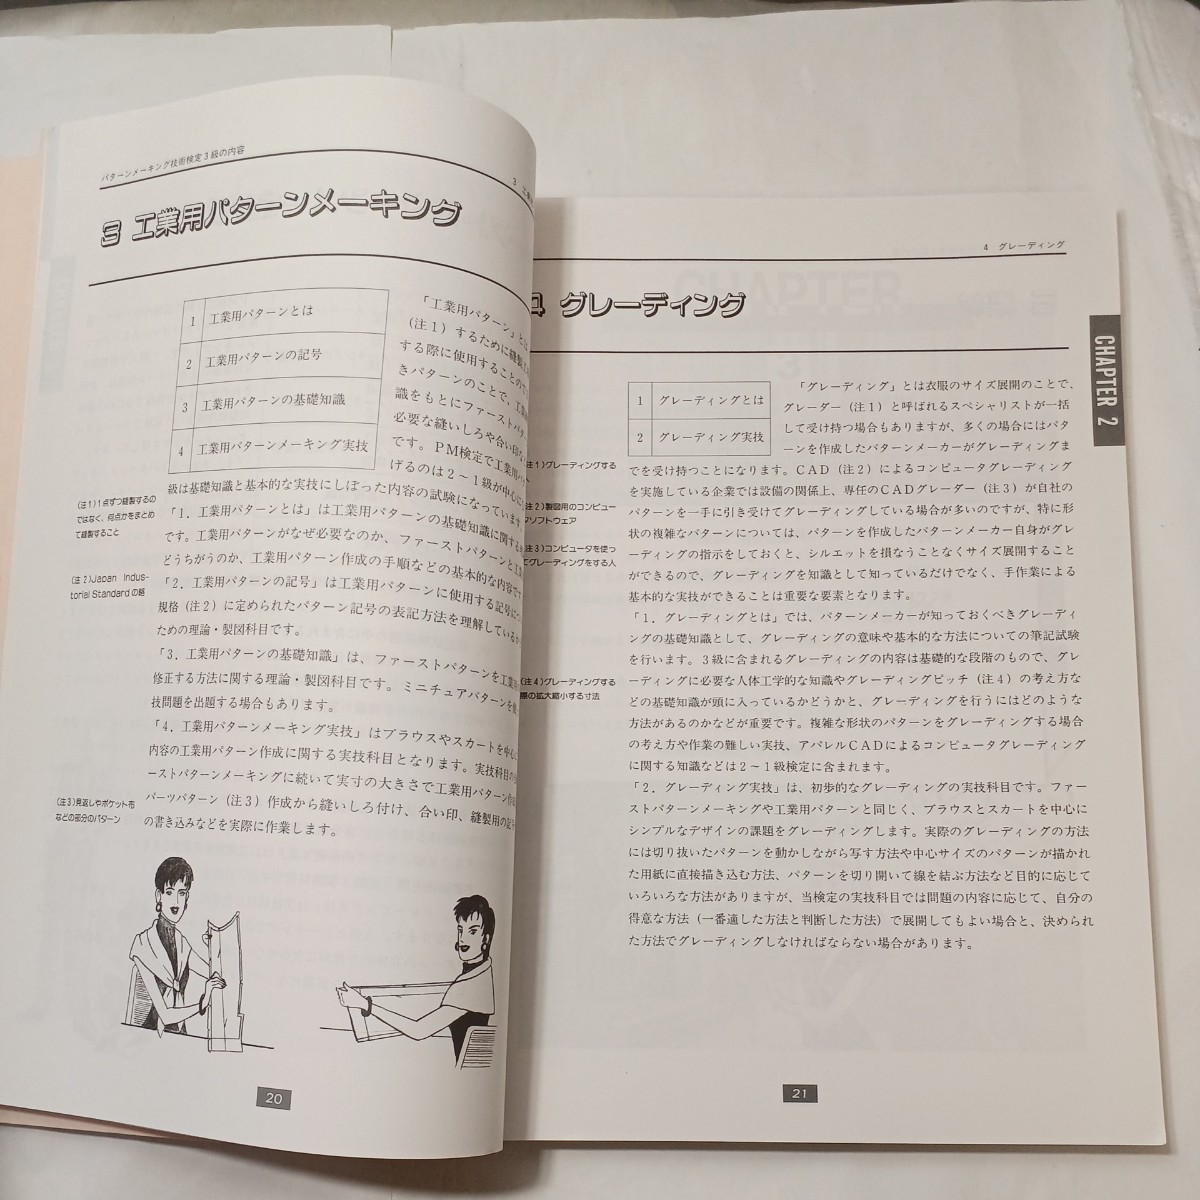 zaa-512♪パターンメーキング技術検定試験3級ガイドブック 日本ファッション教育振興協会 (著) 日本ファッション教育振興協会 (2004/3/20)